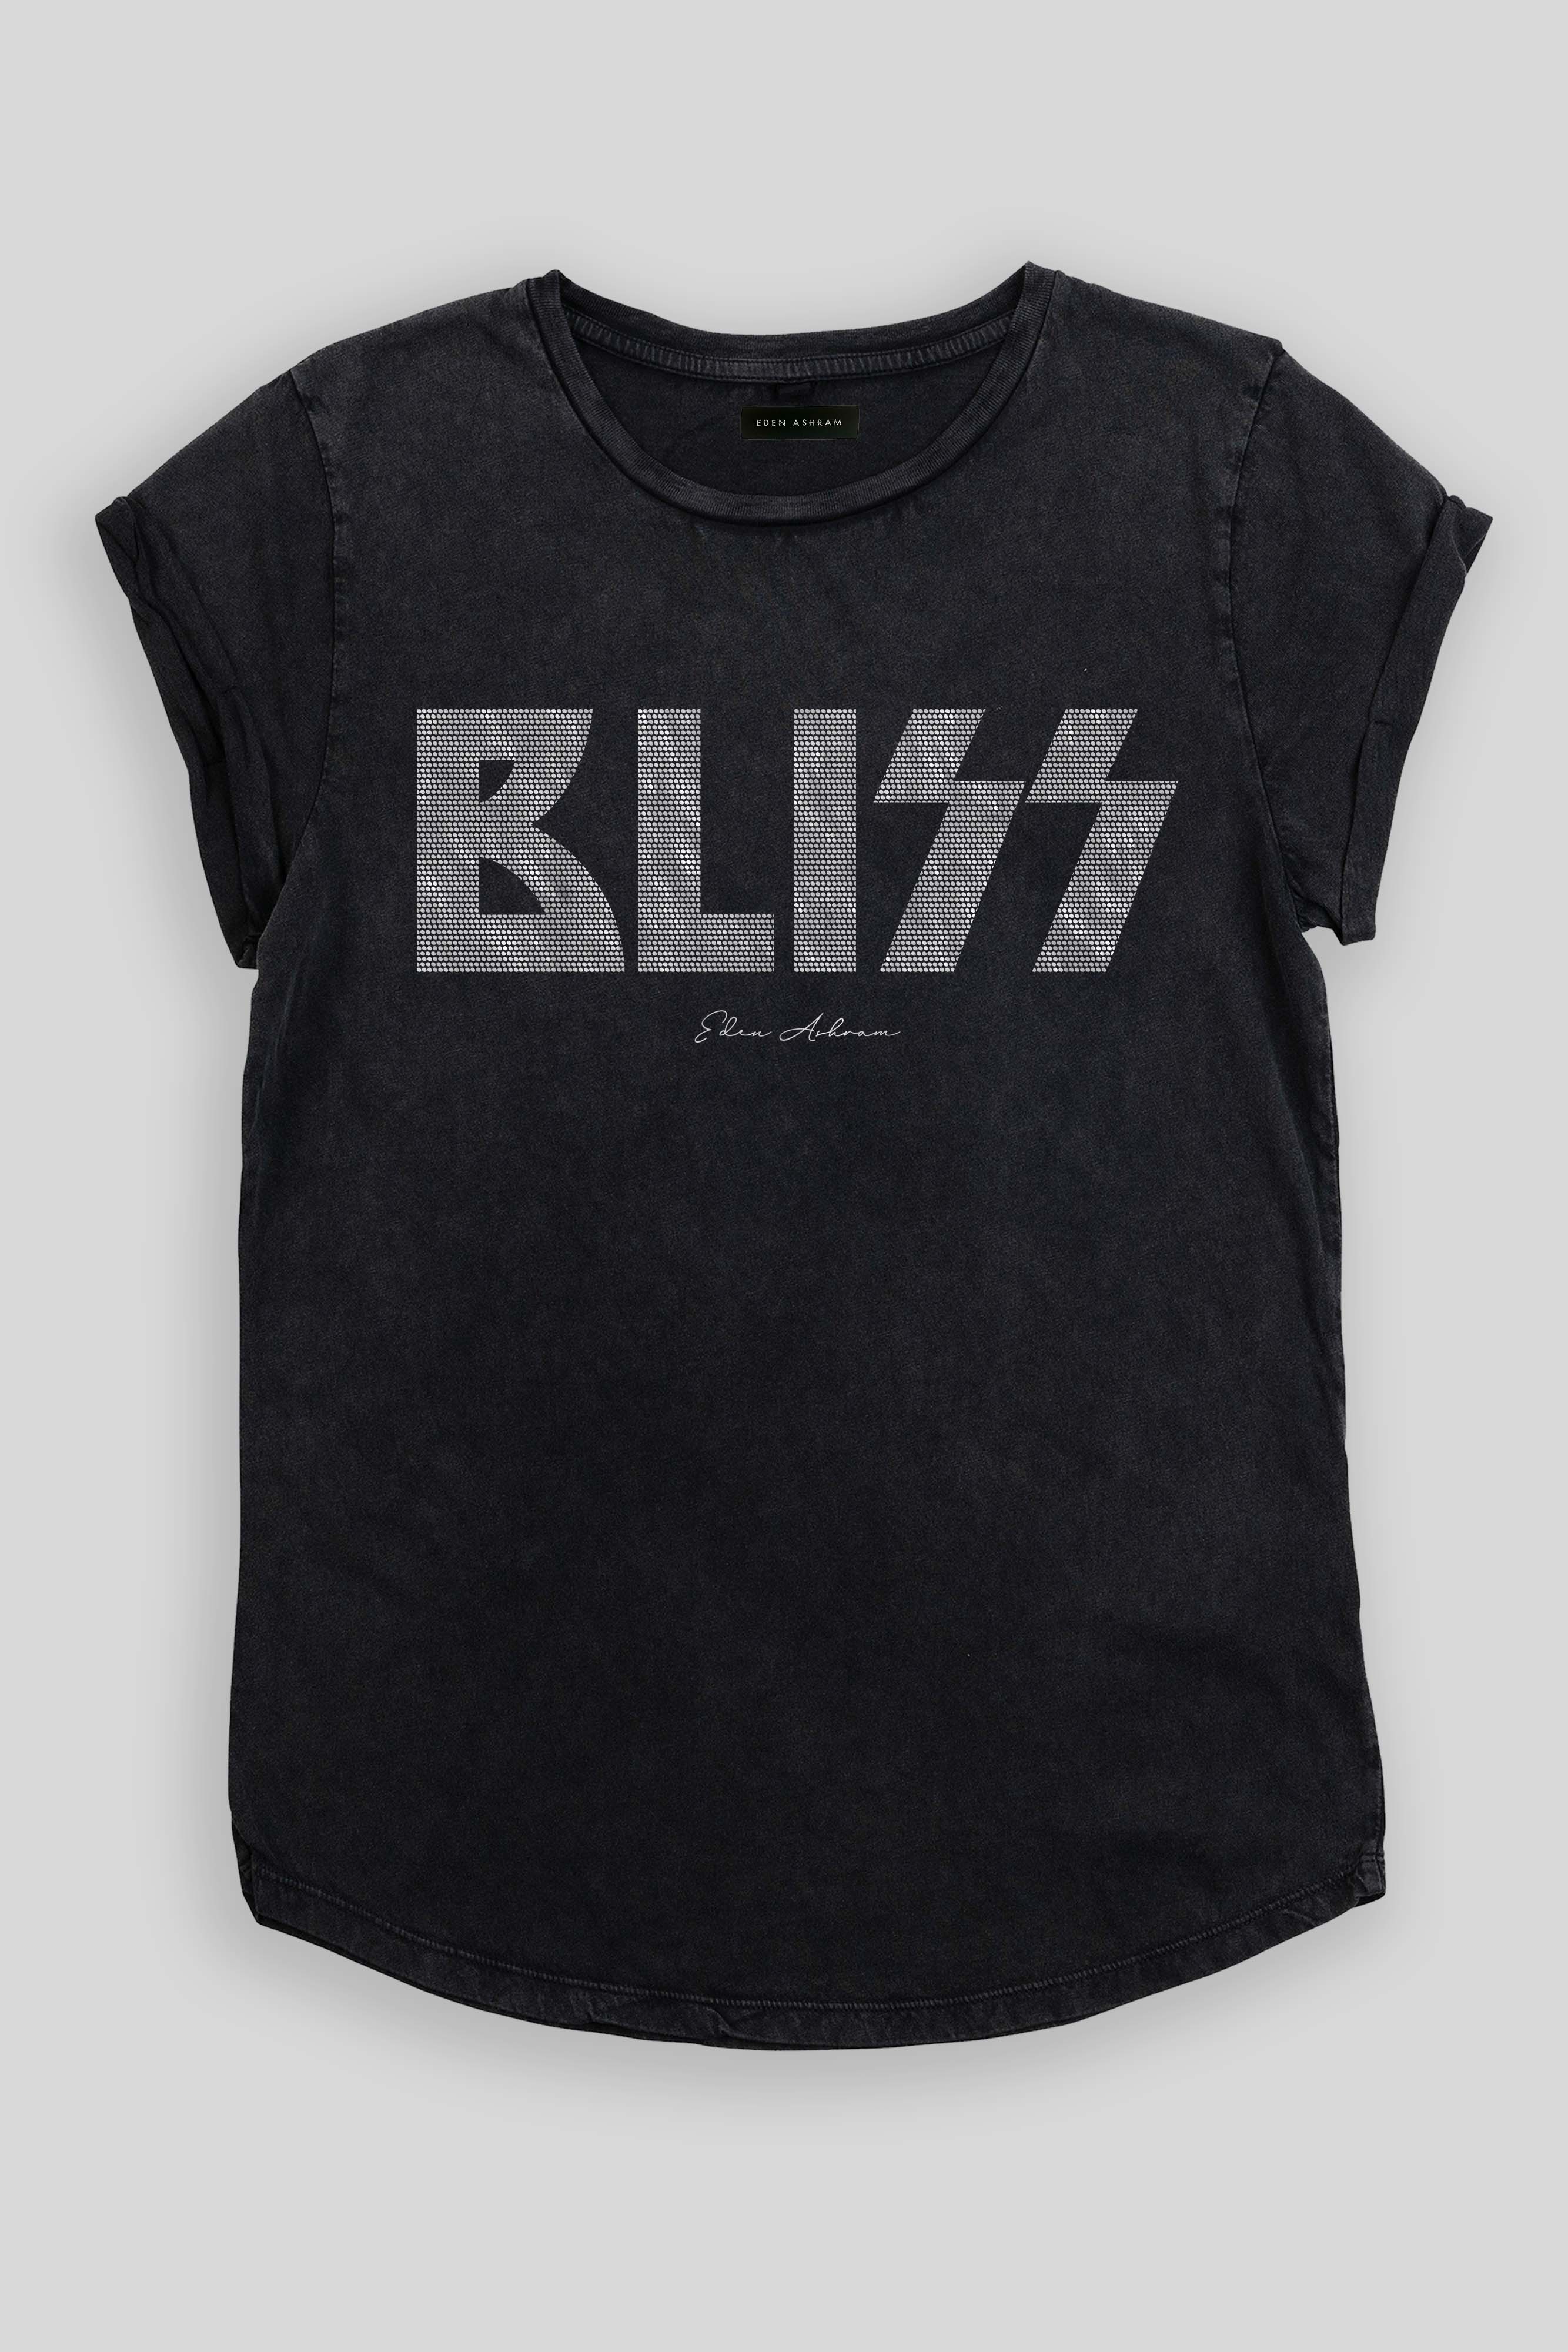 EDEN ASHRAM BLISS Rolled Sleeve Tour T-Shirt Stonewash Black | Silver